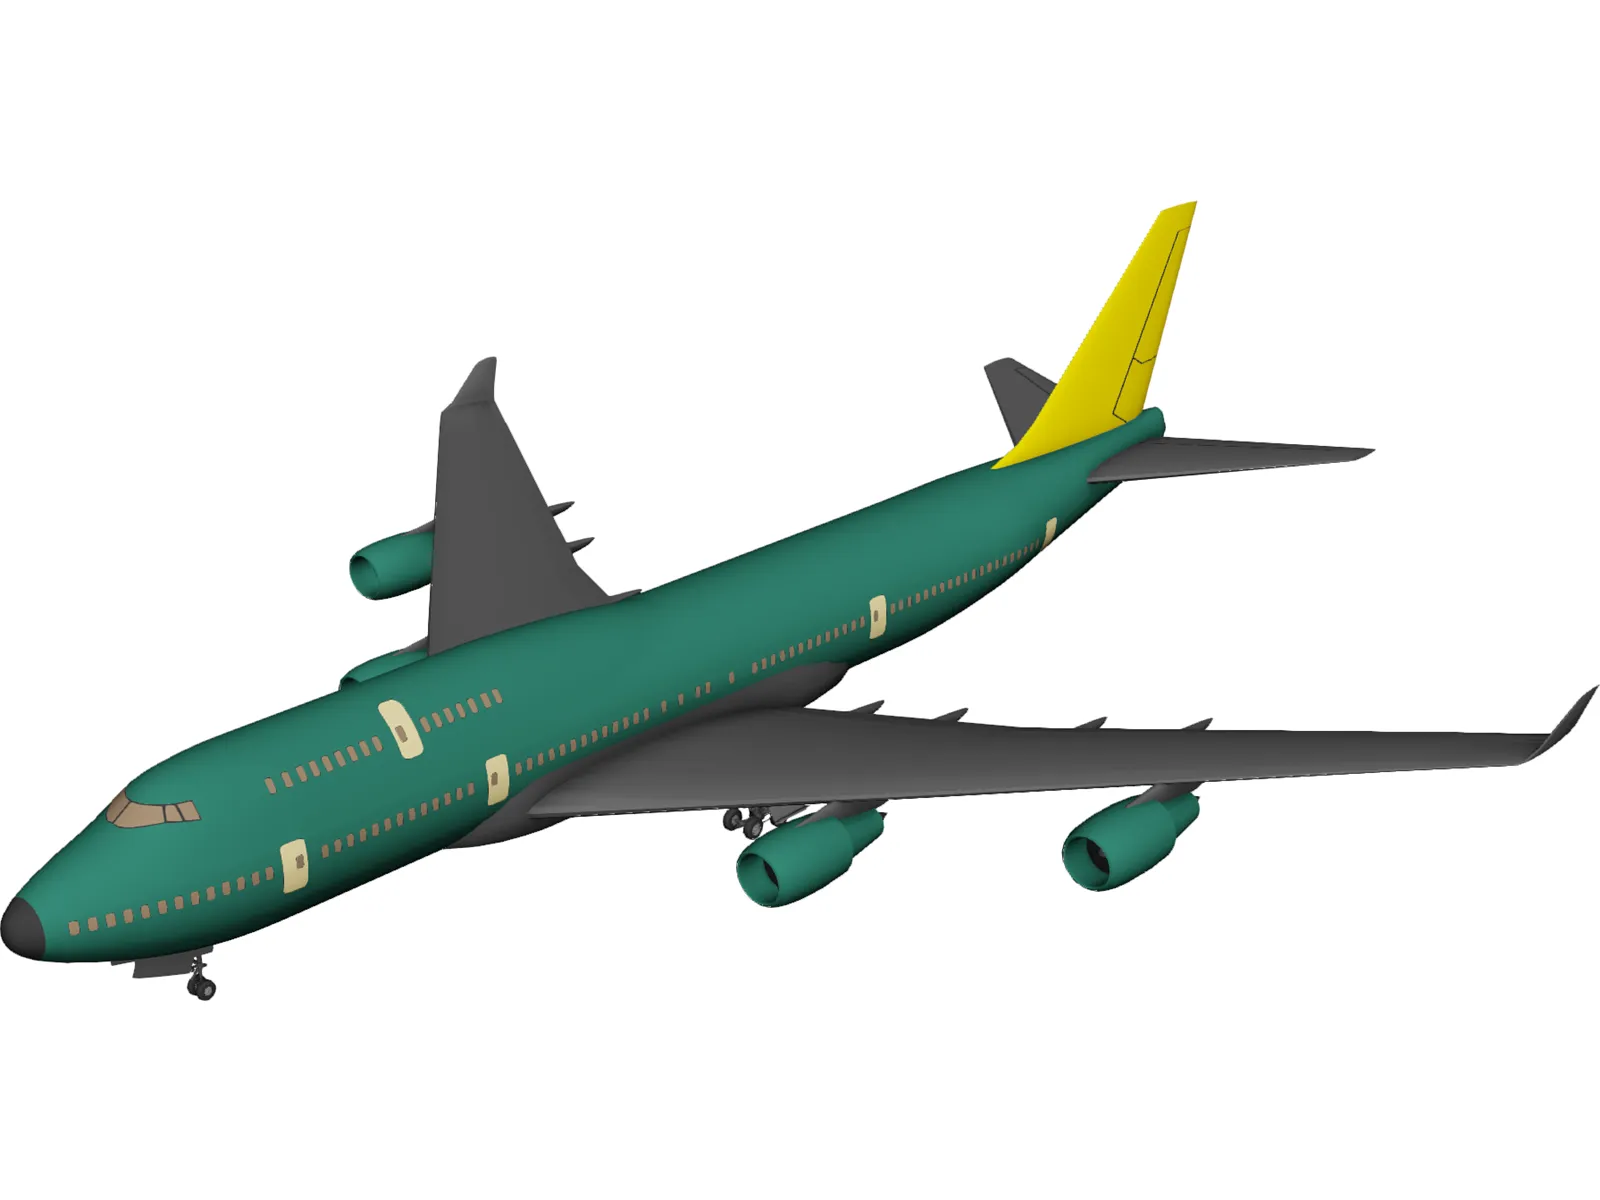 Boeing 747-400 3D Model